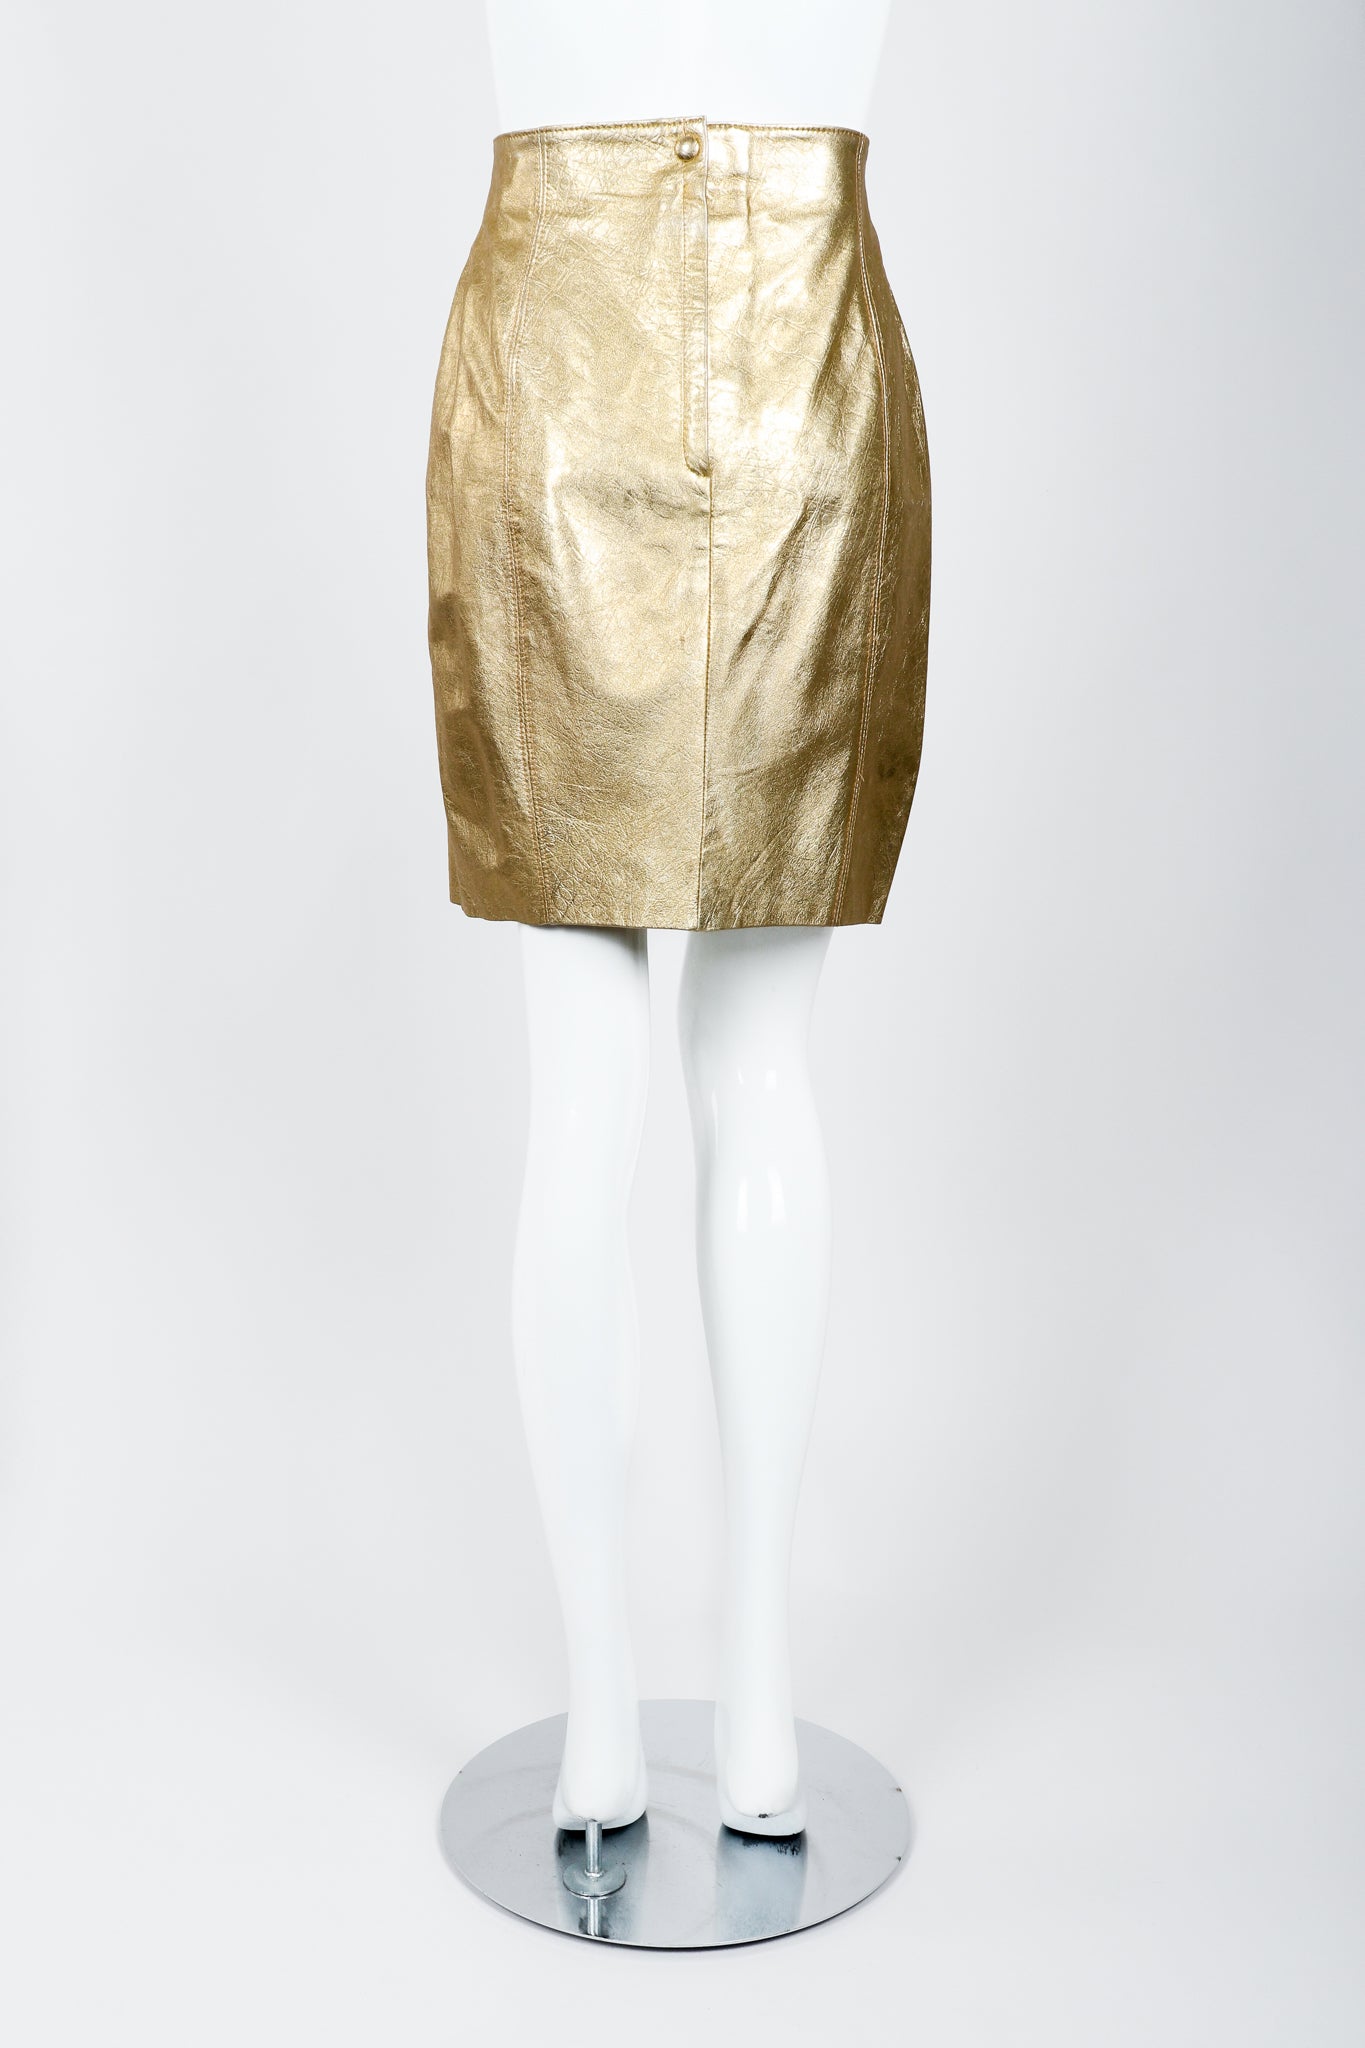 Vintage Lillie Rubin Gold Leather Lamé Skirt on Mannequin back at Recess